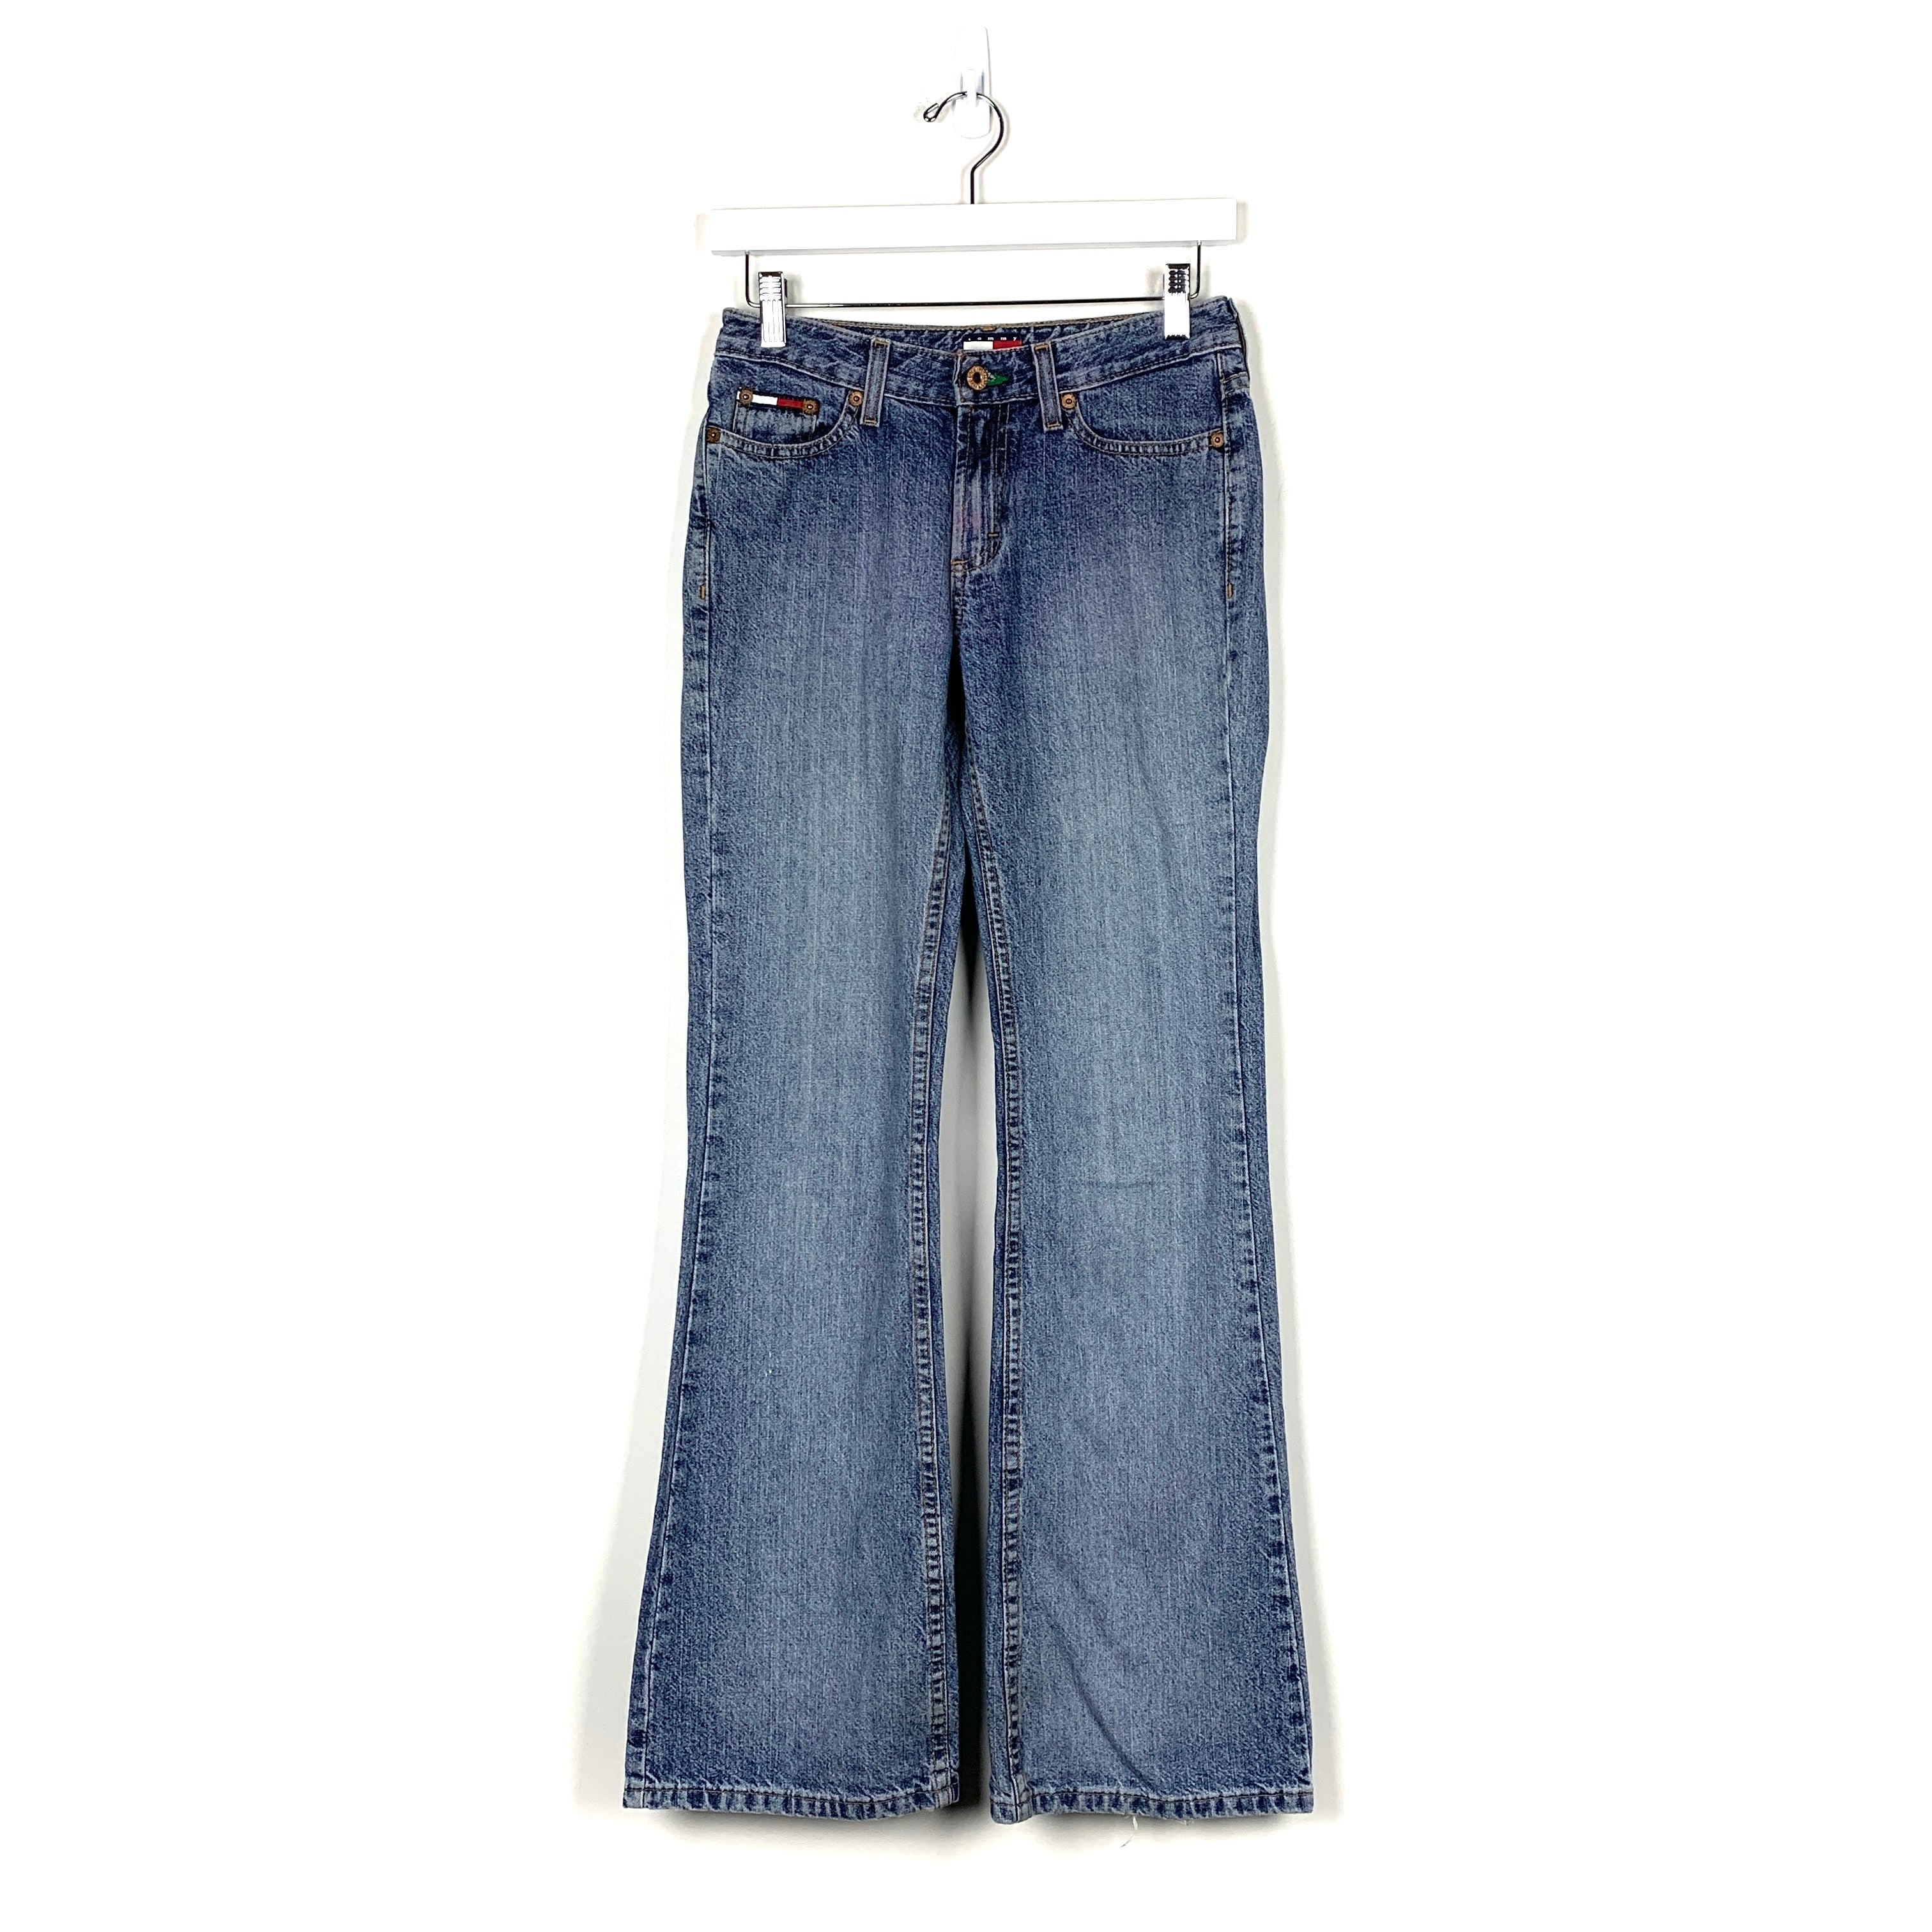 Vintage Tommy Hilfiger Jeans - Women's 25/31